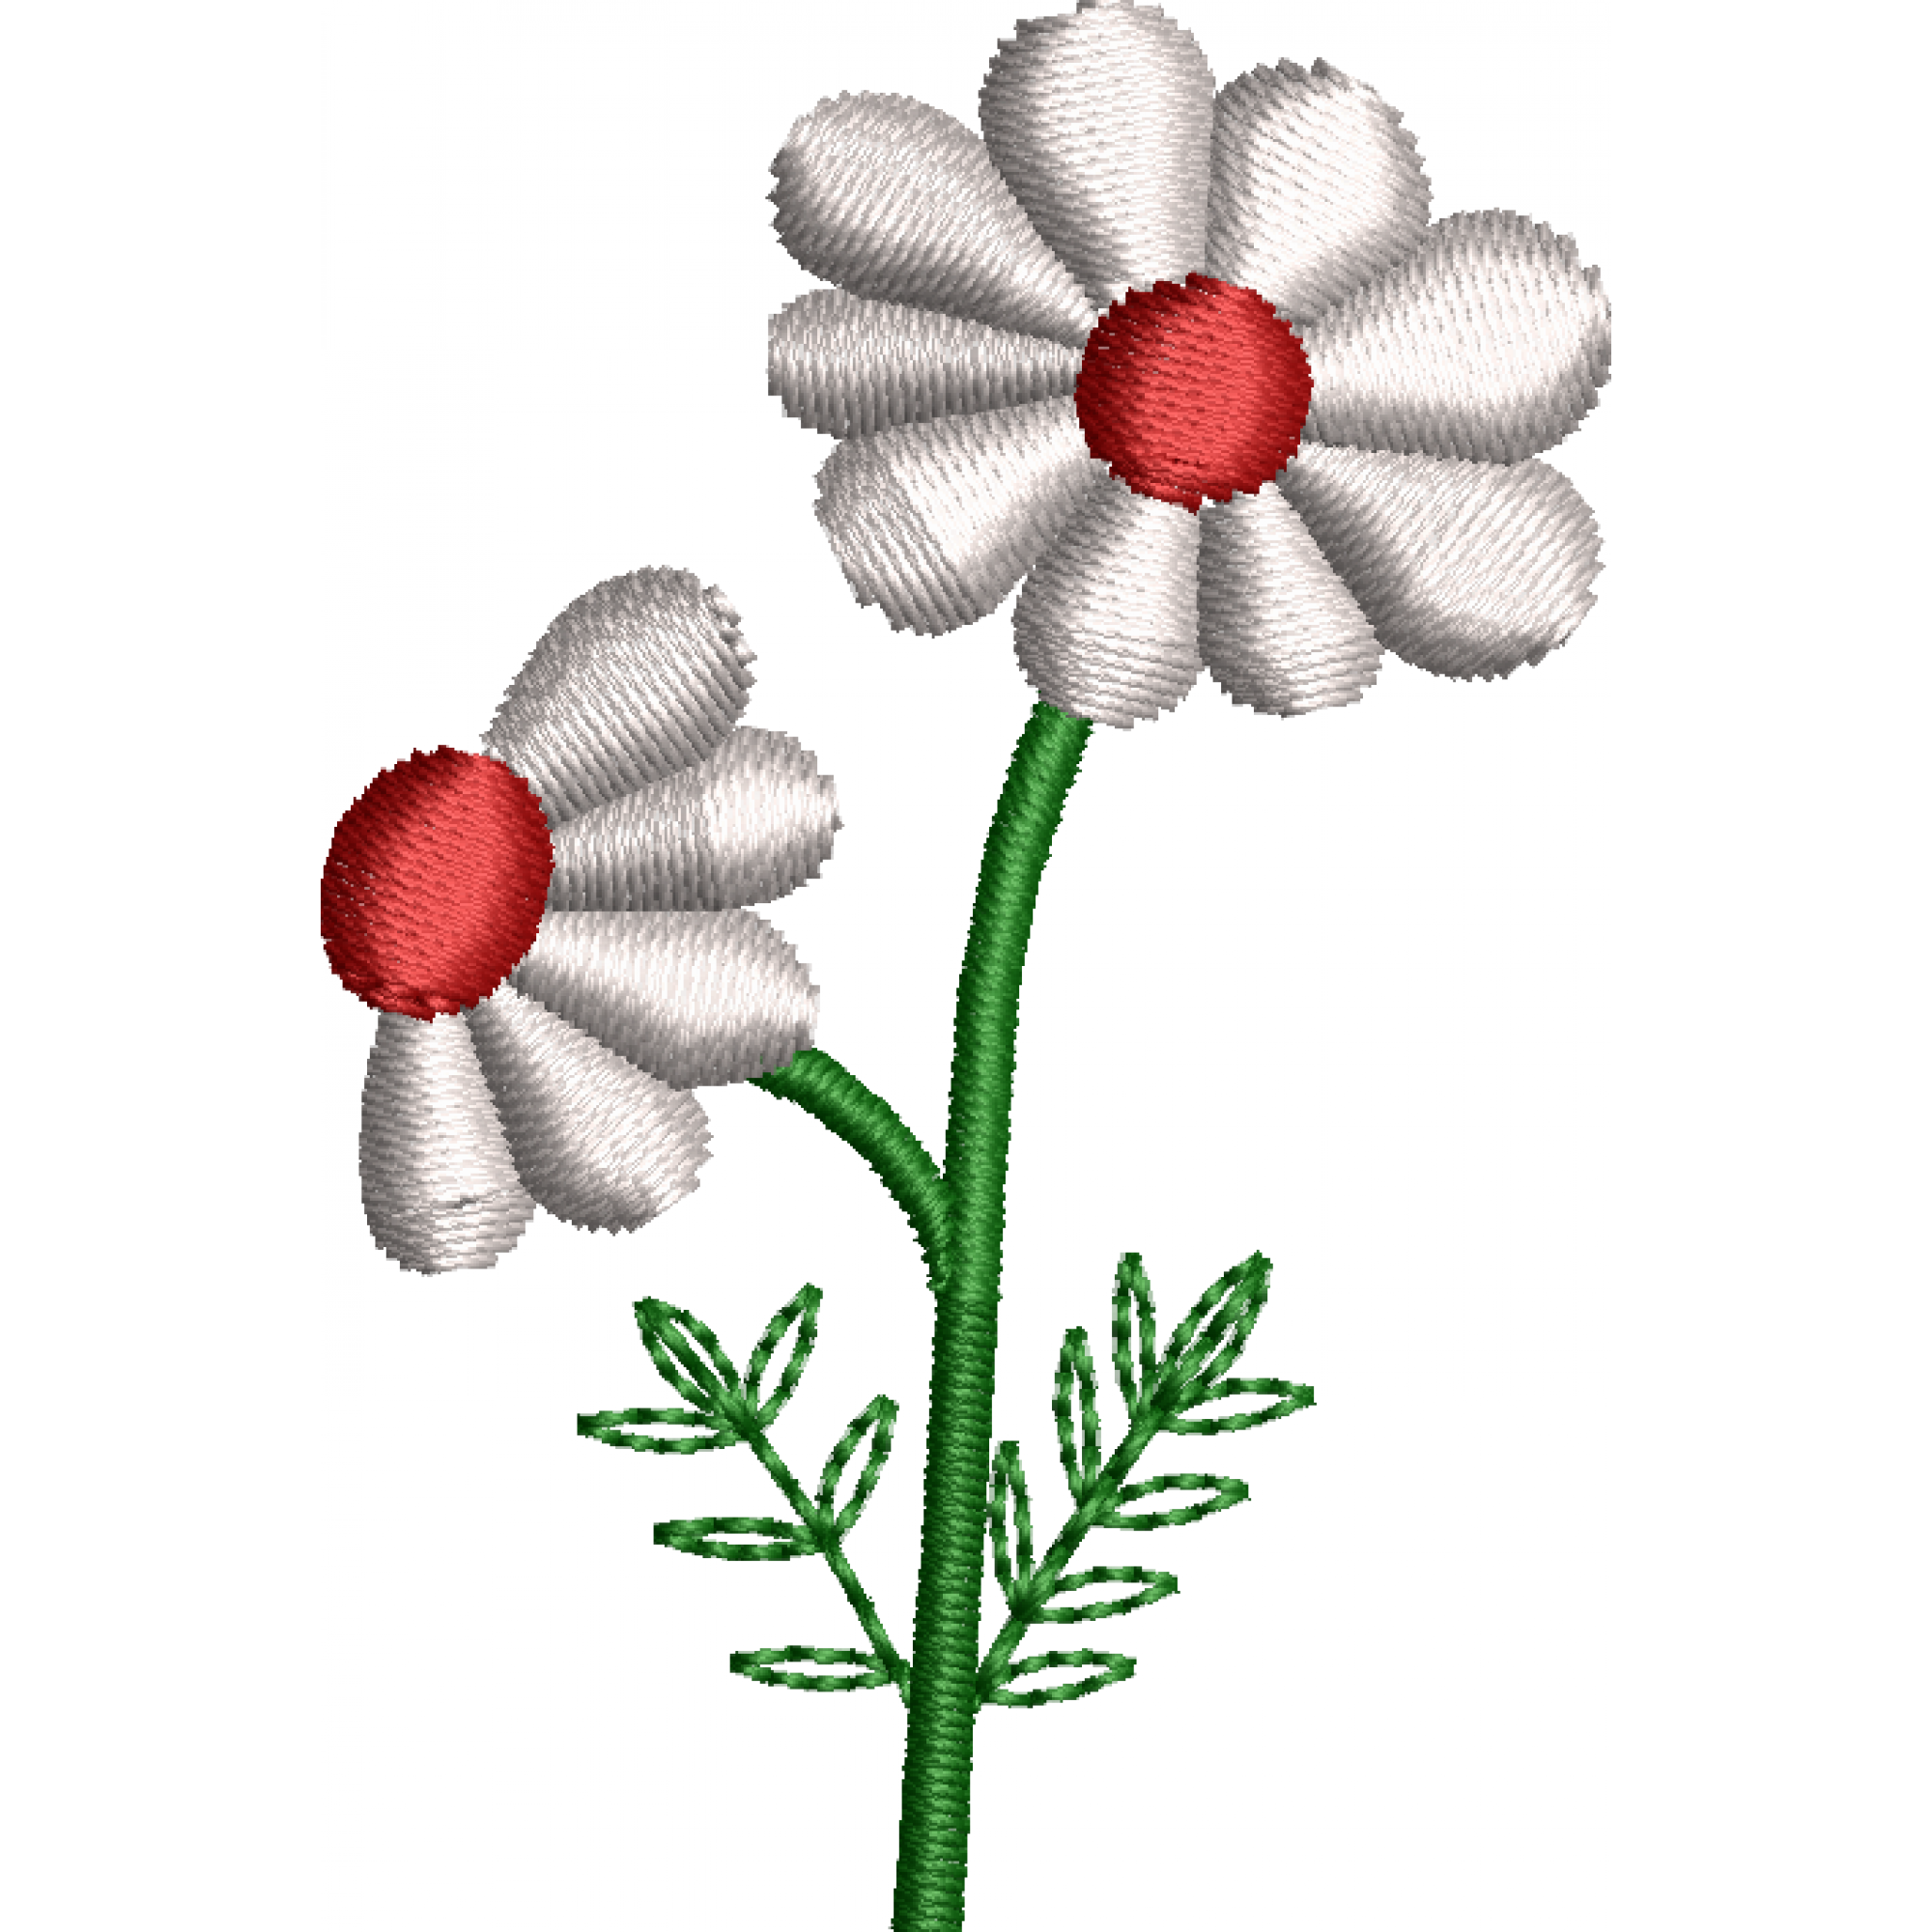 Daisy flower embroidery design